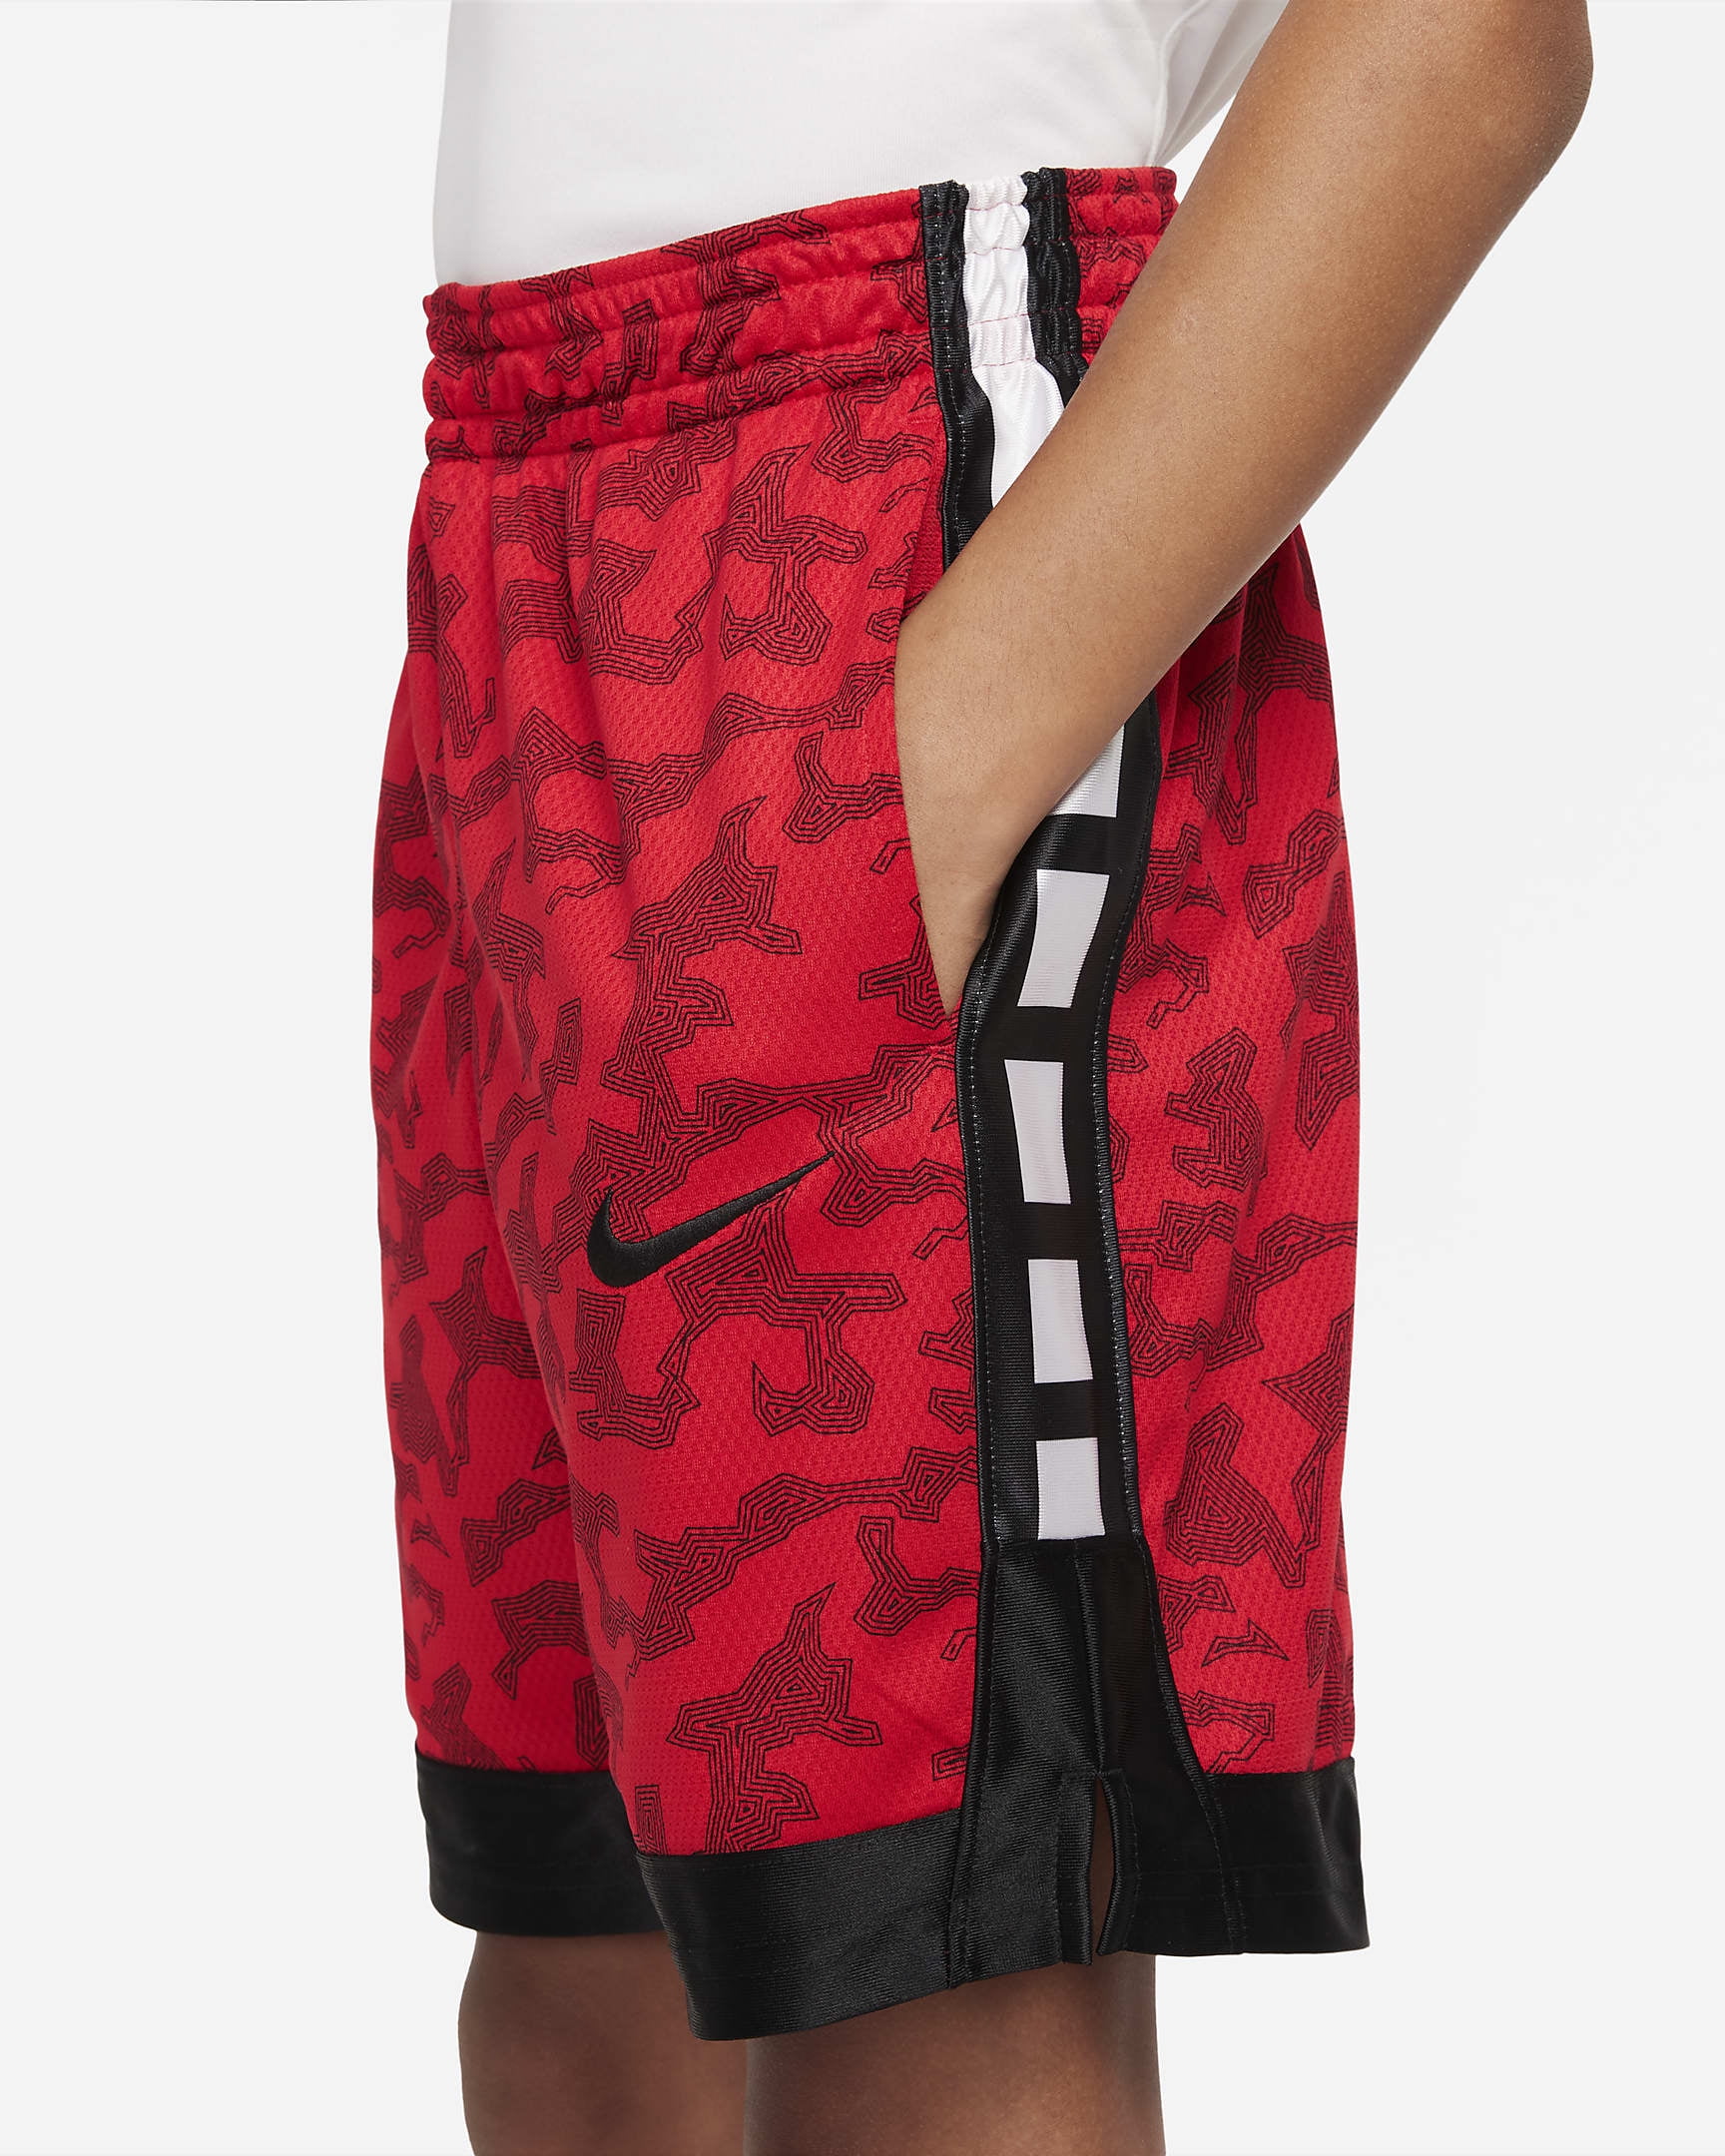 Nike Boys Elite Printed Basketball Shorts - Walmart.com